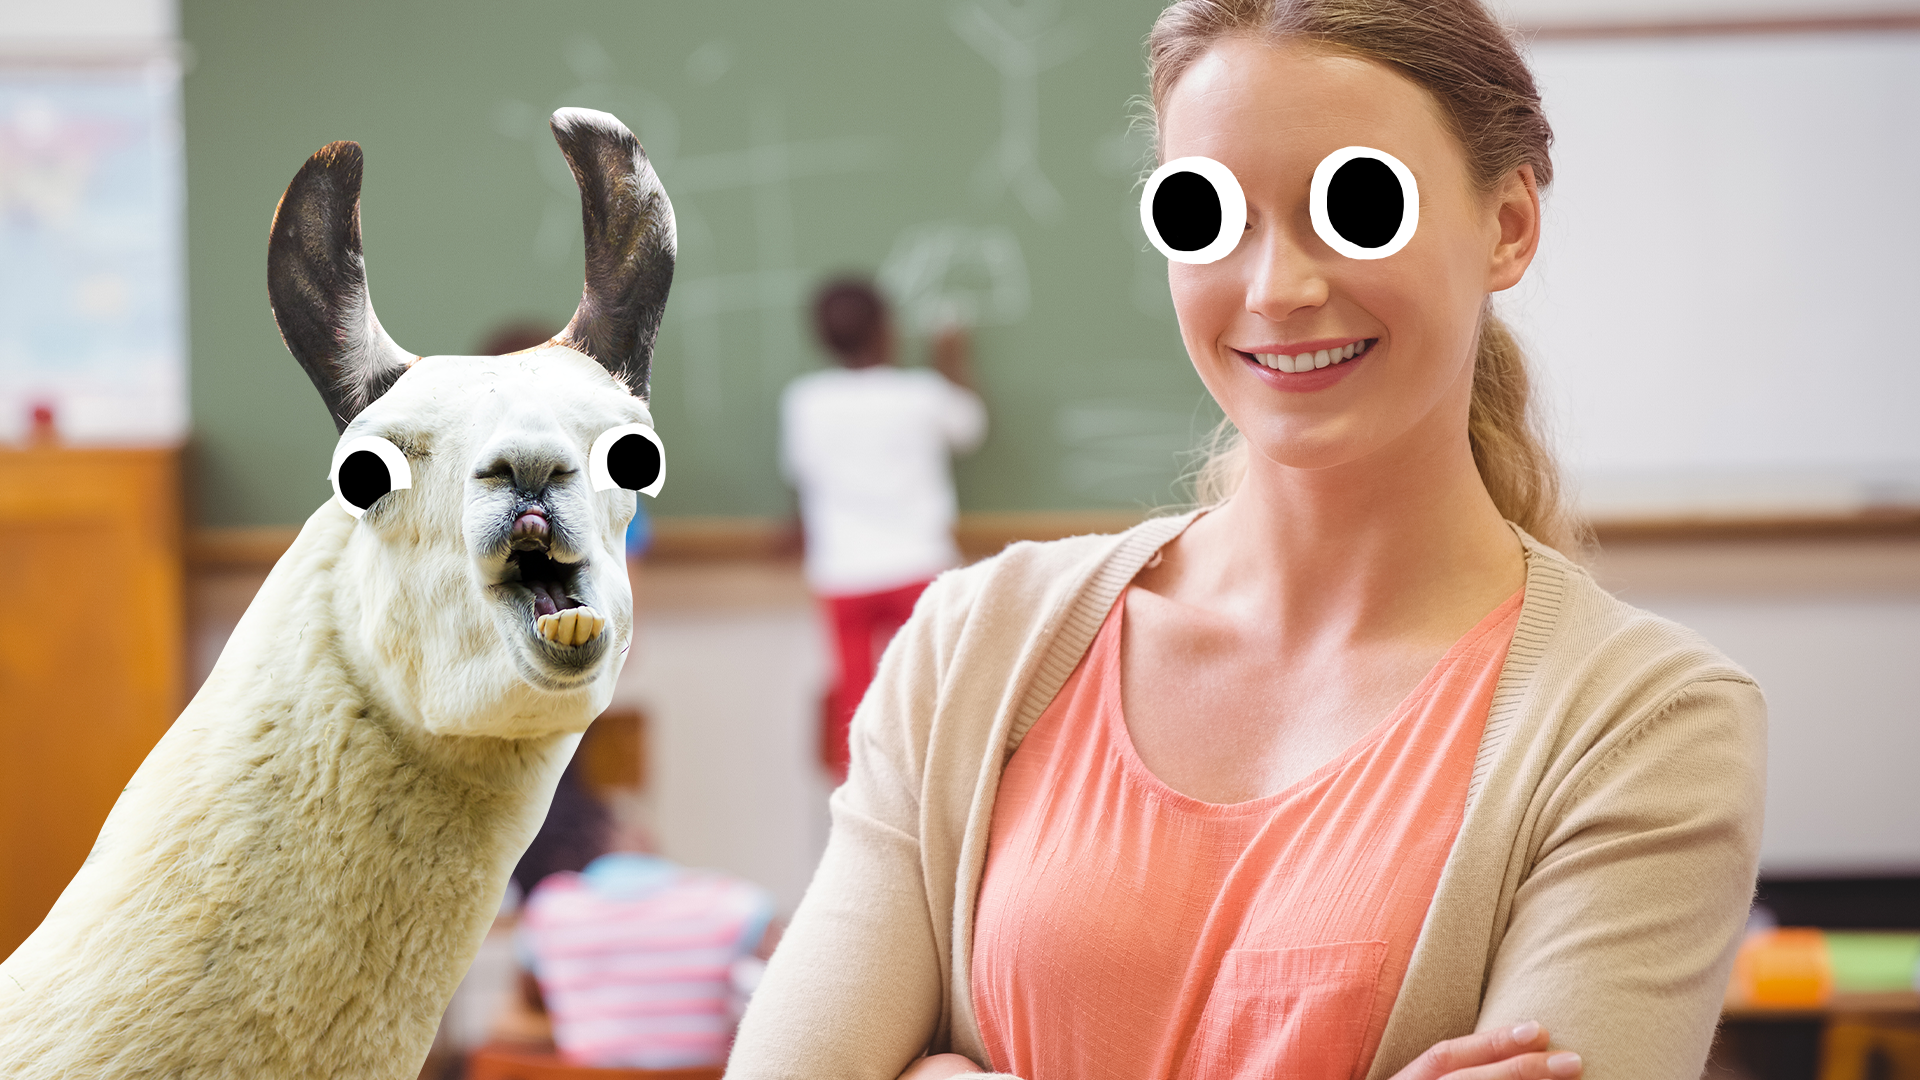 Smiling teacher and derpy llama